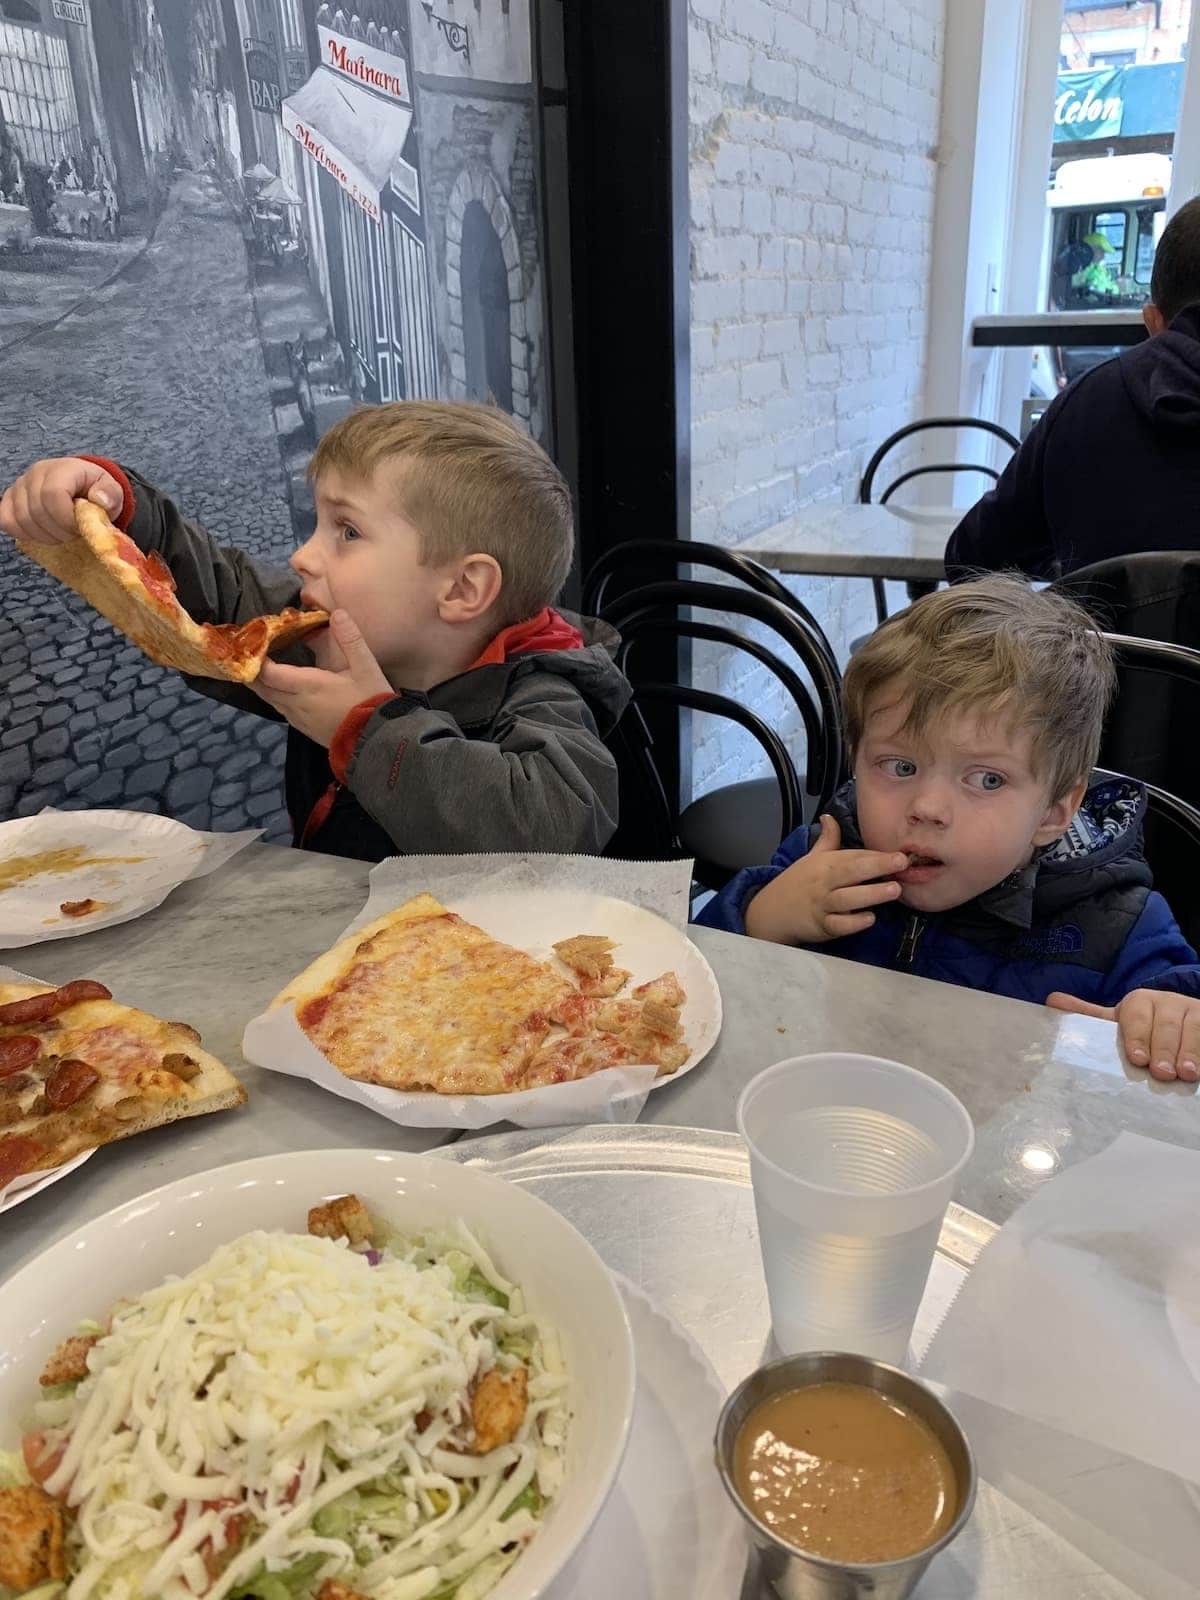 Blake and Eddie eating pizza